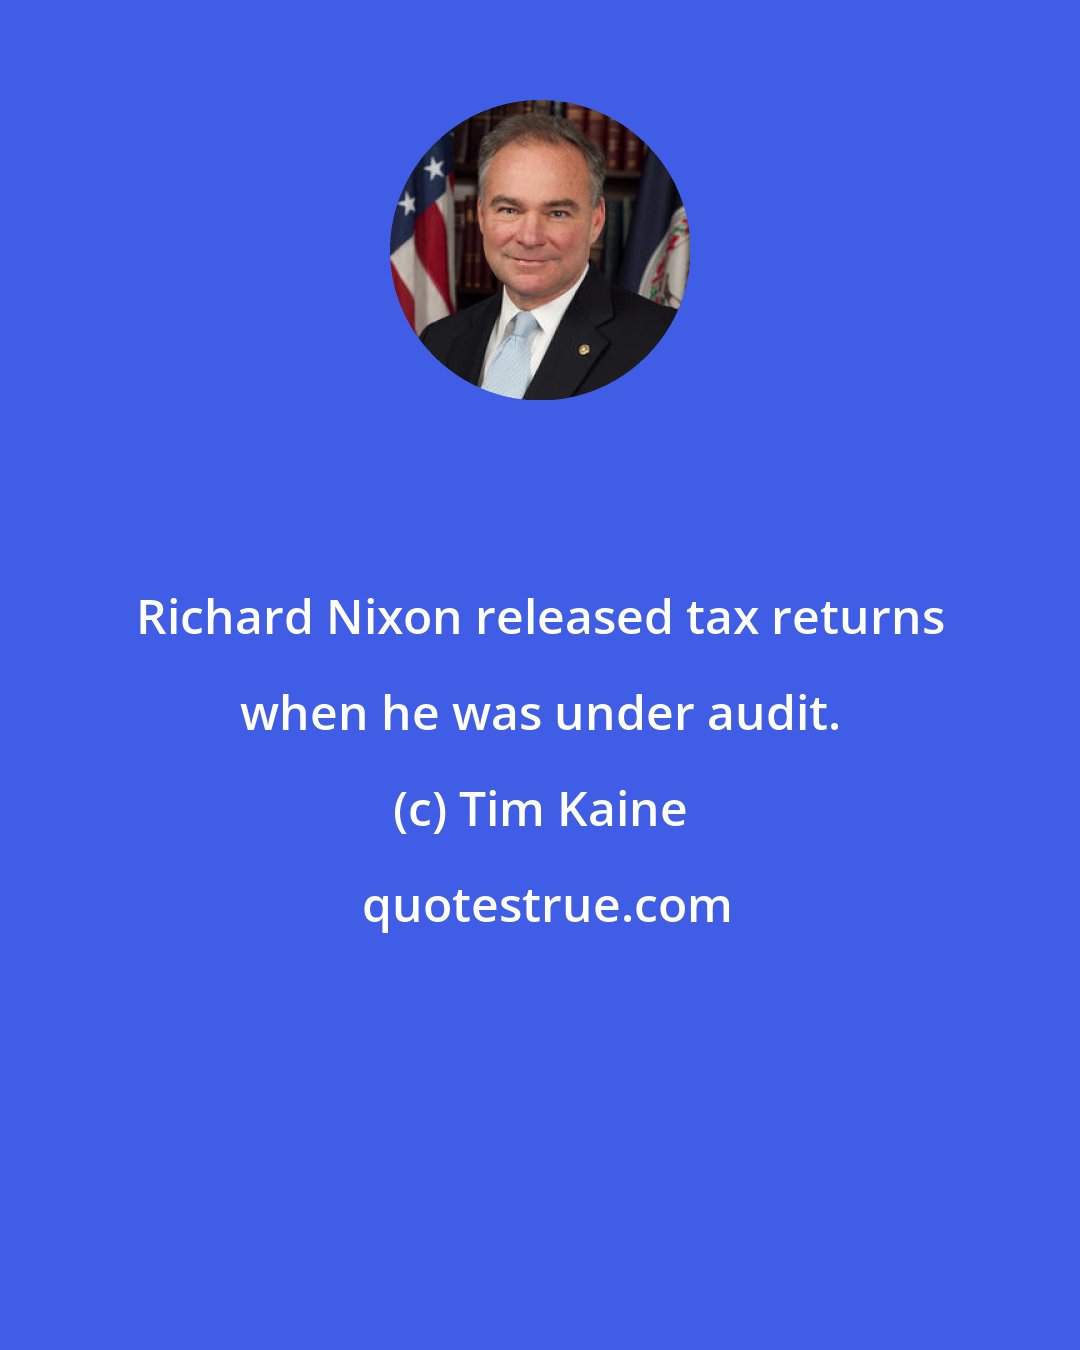 Tim Kaine: Richard Nixon released tax returns when he was under audit.